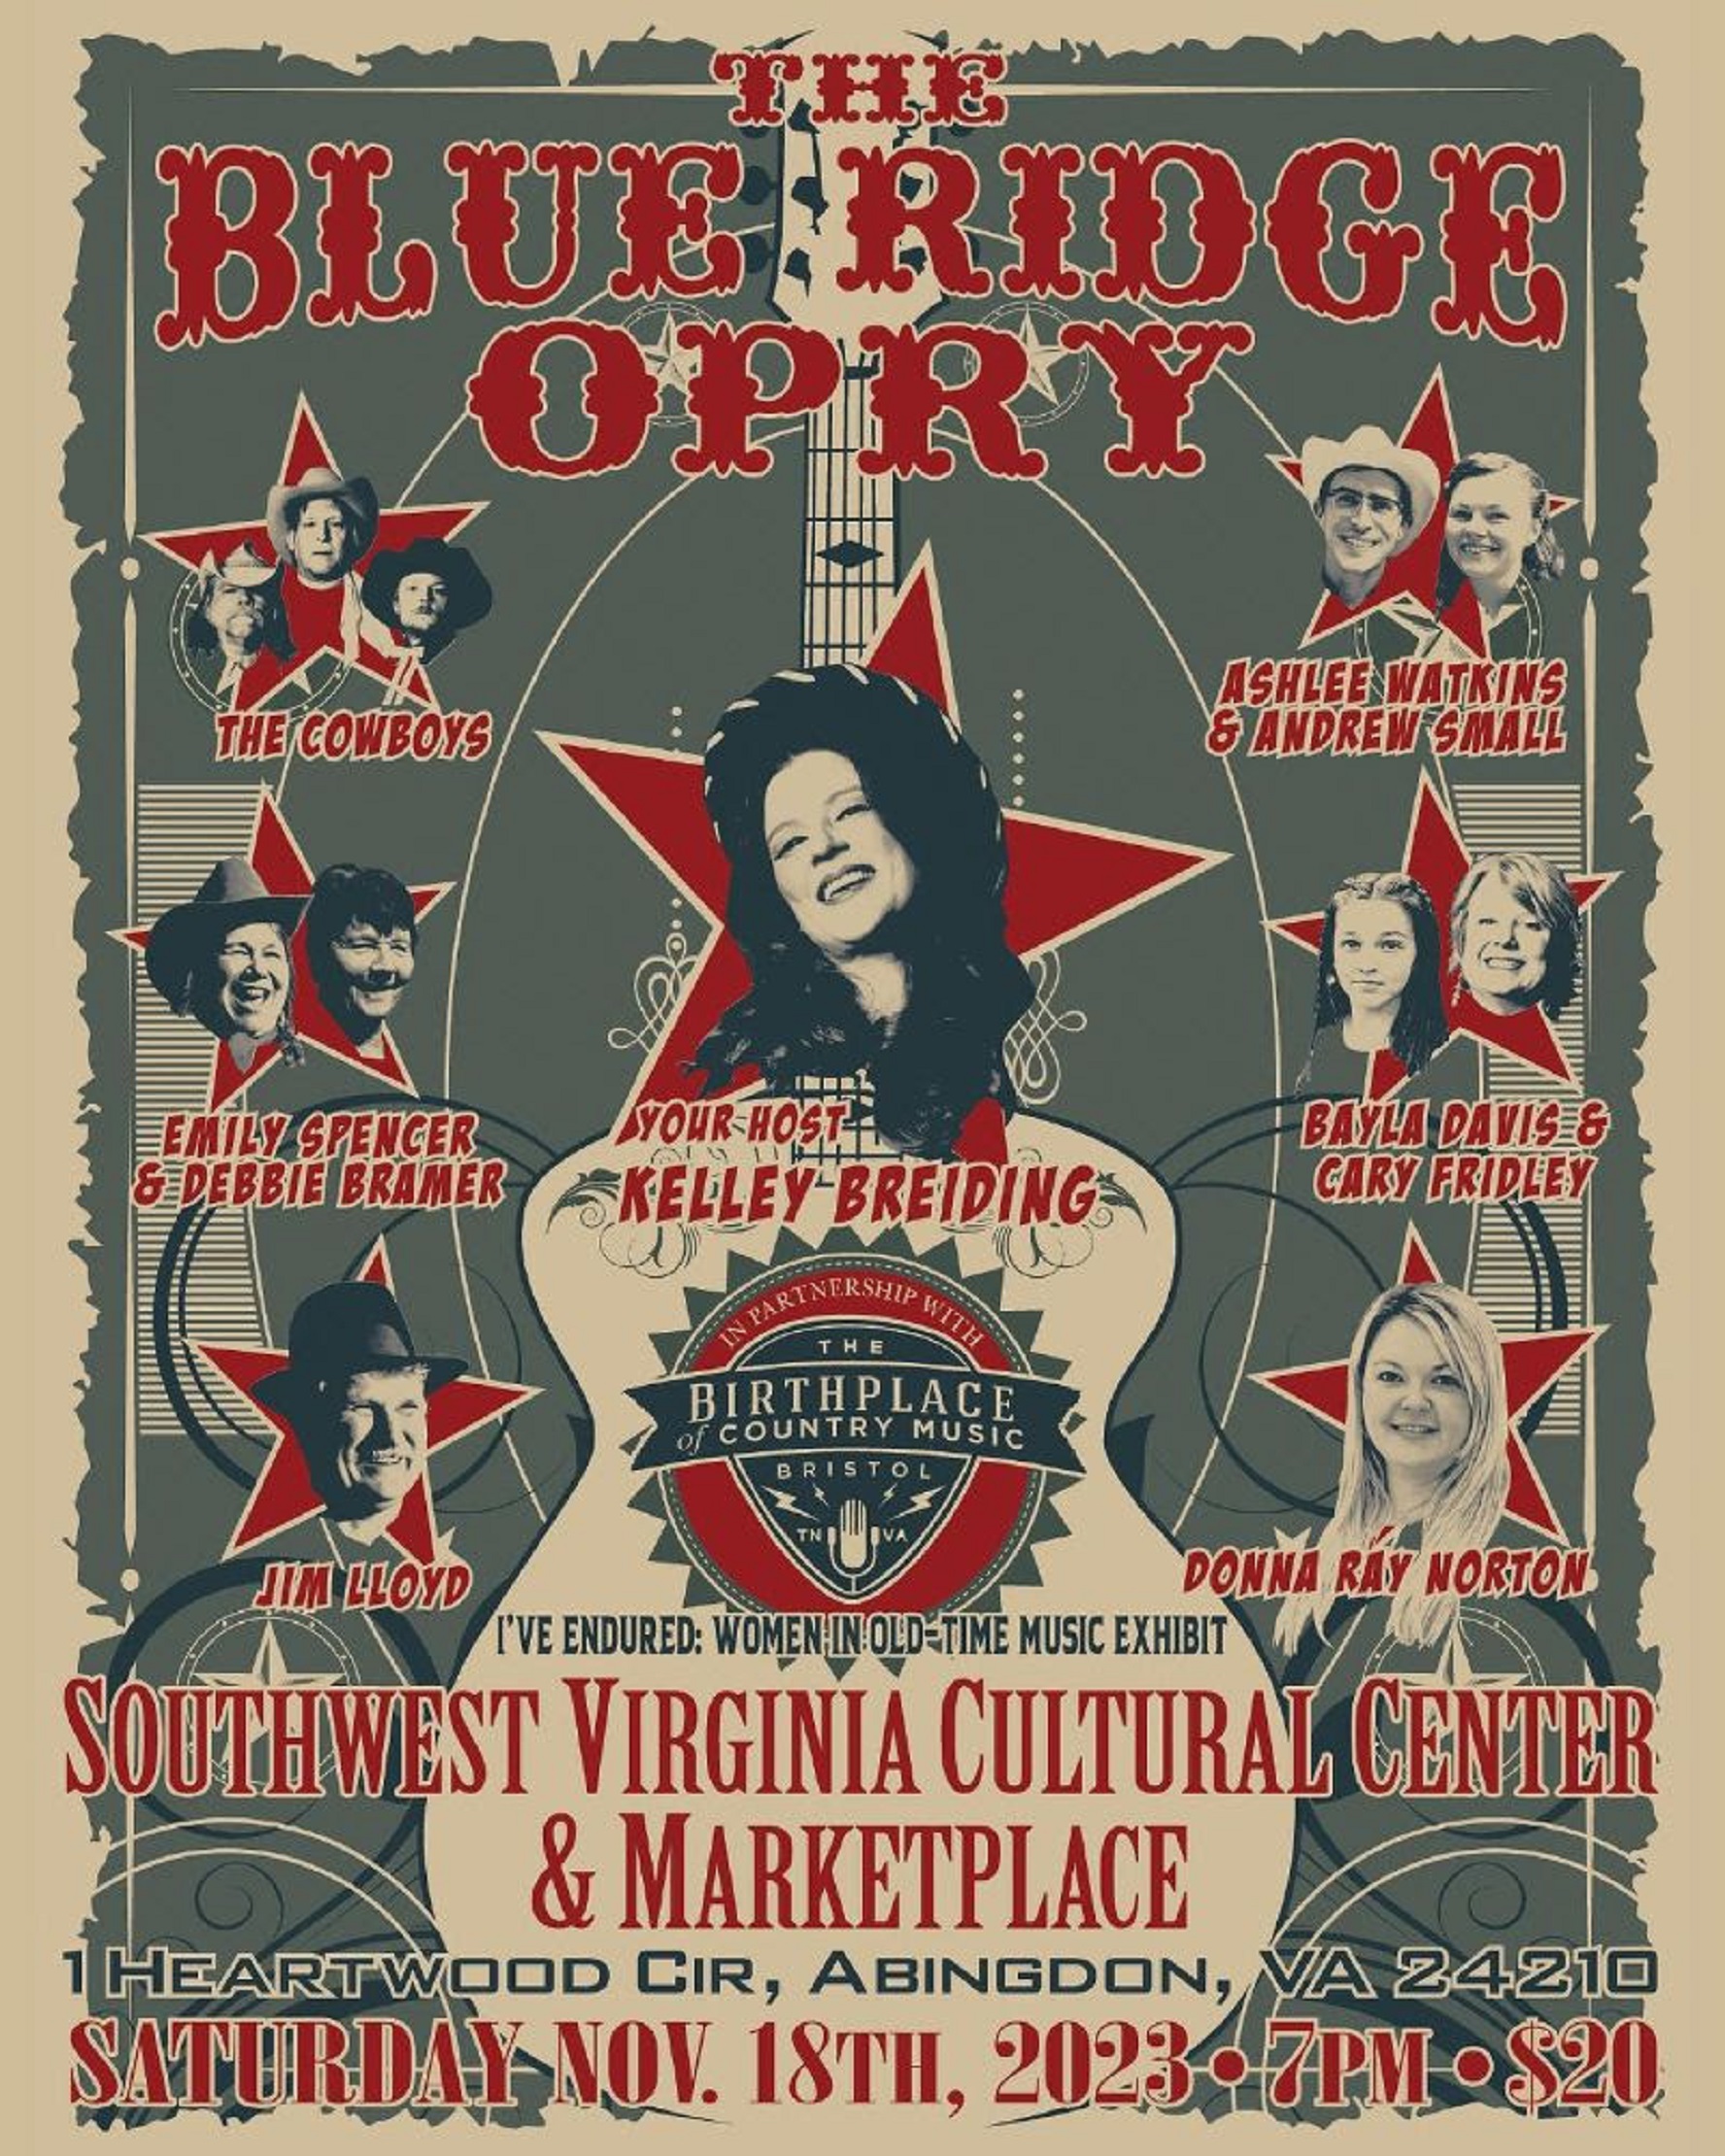 BCM Presents The Blue Ridge Opry in Abingdon Nov. 18